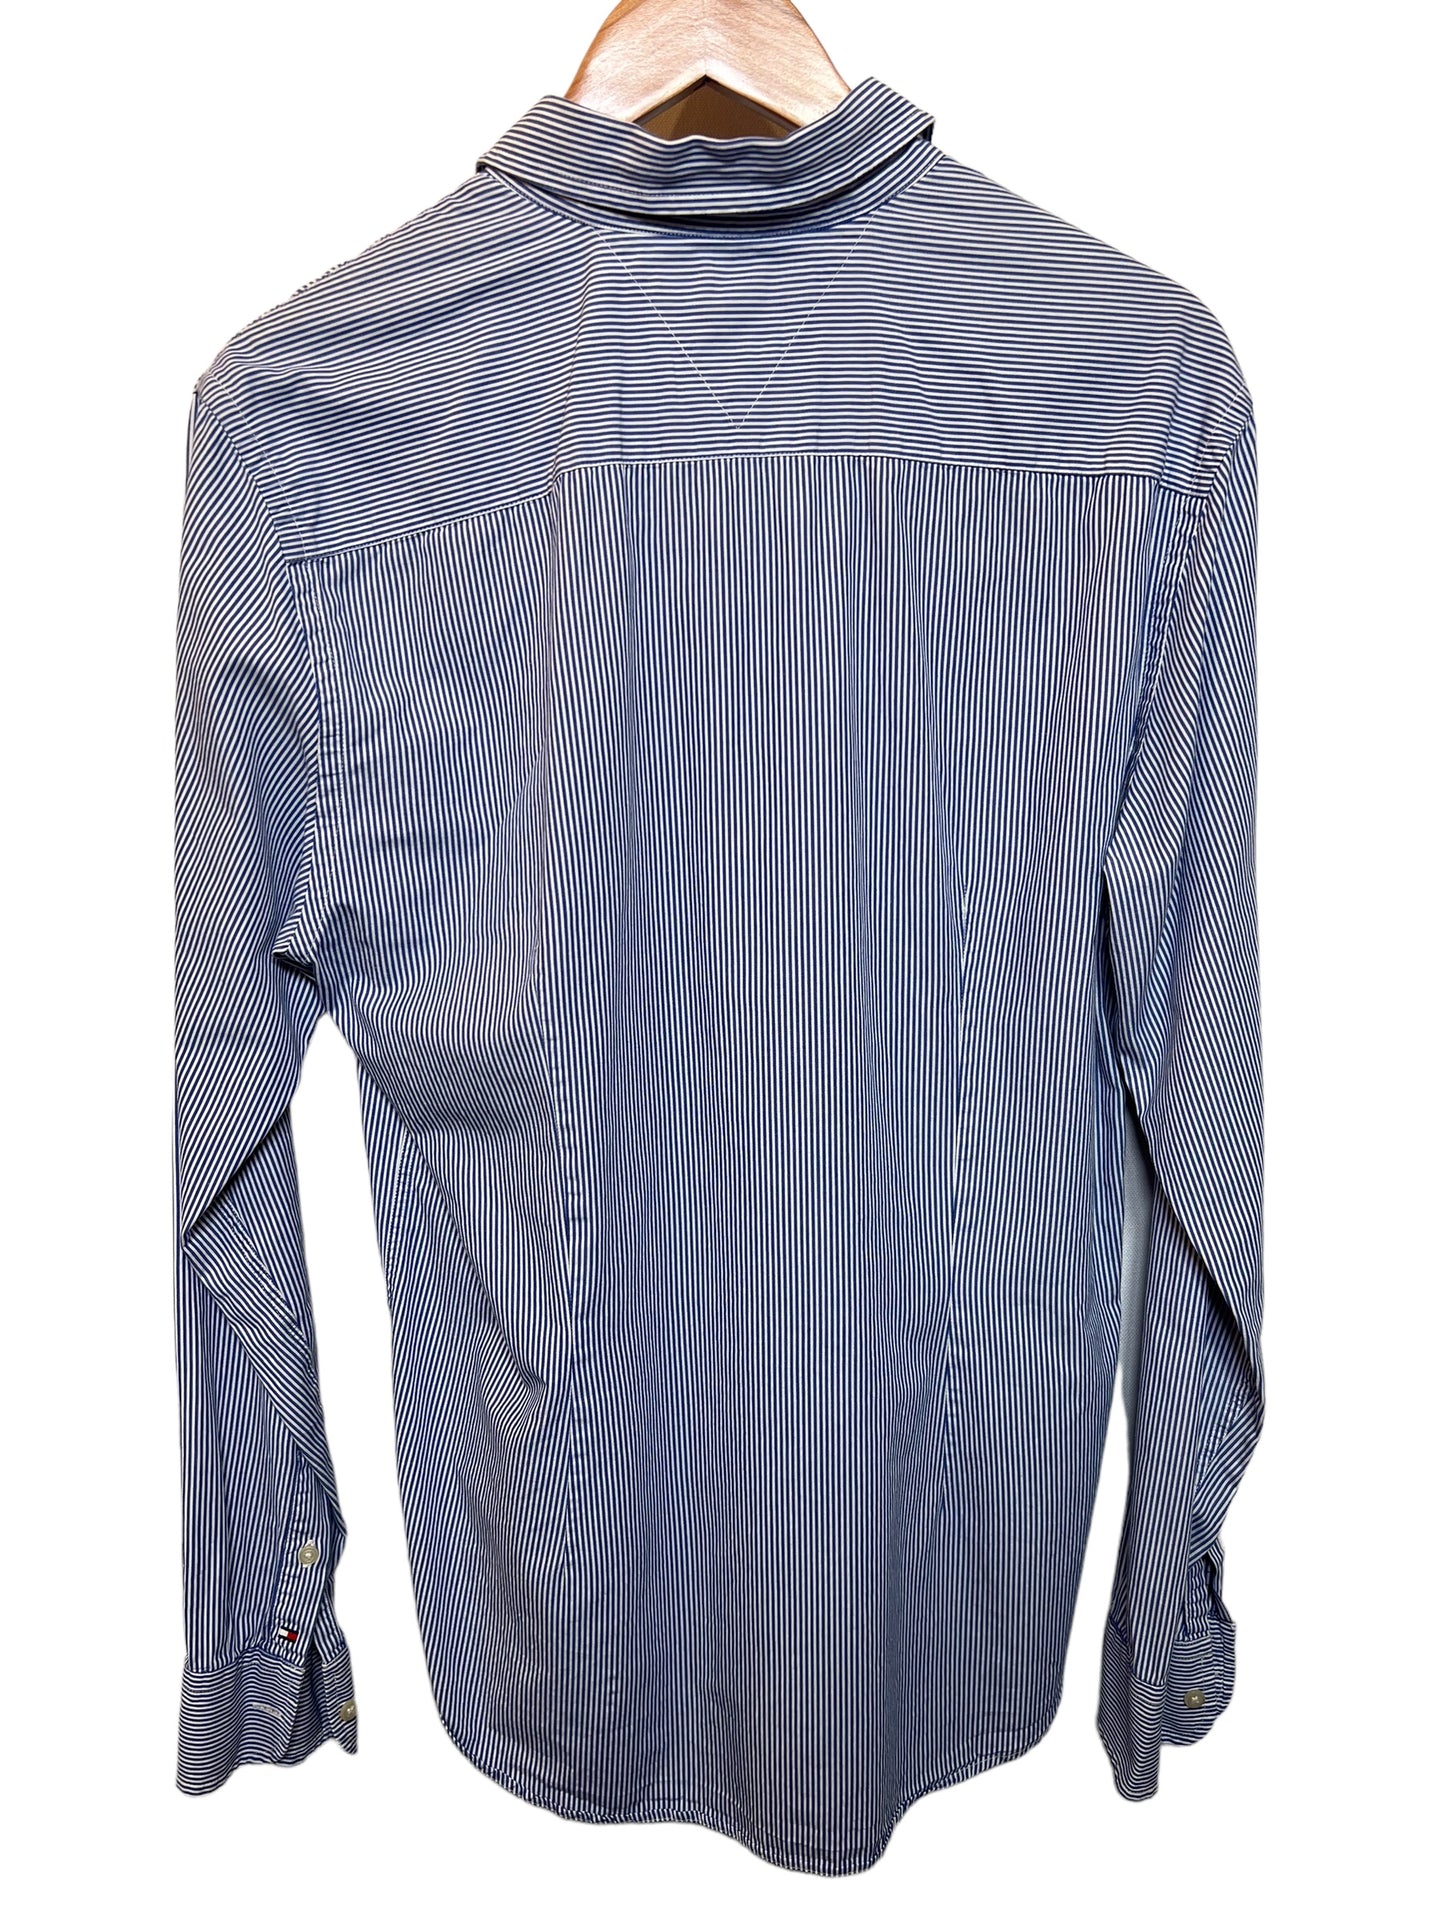 Tommy Hilfiger Striped Shirt (Size L)